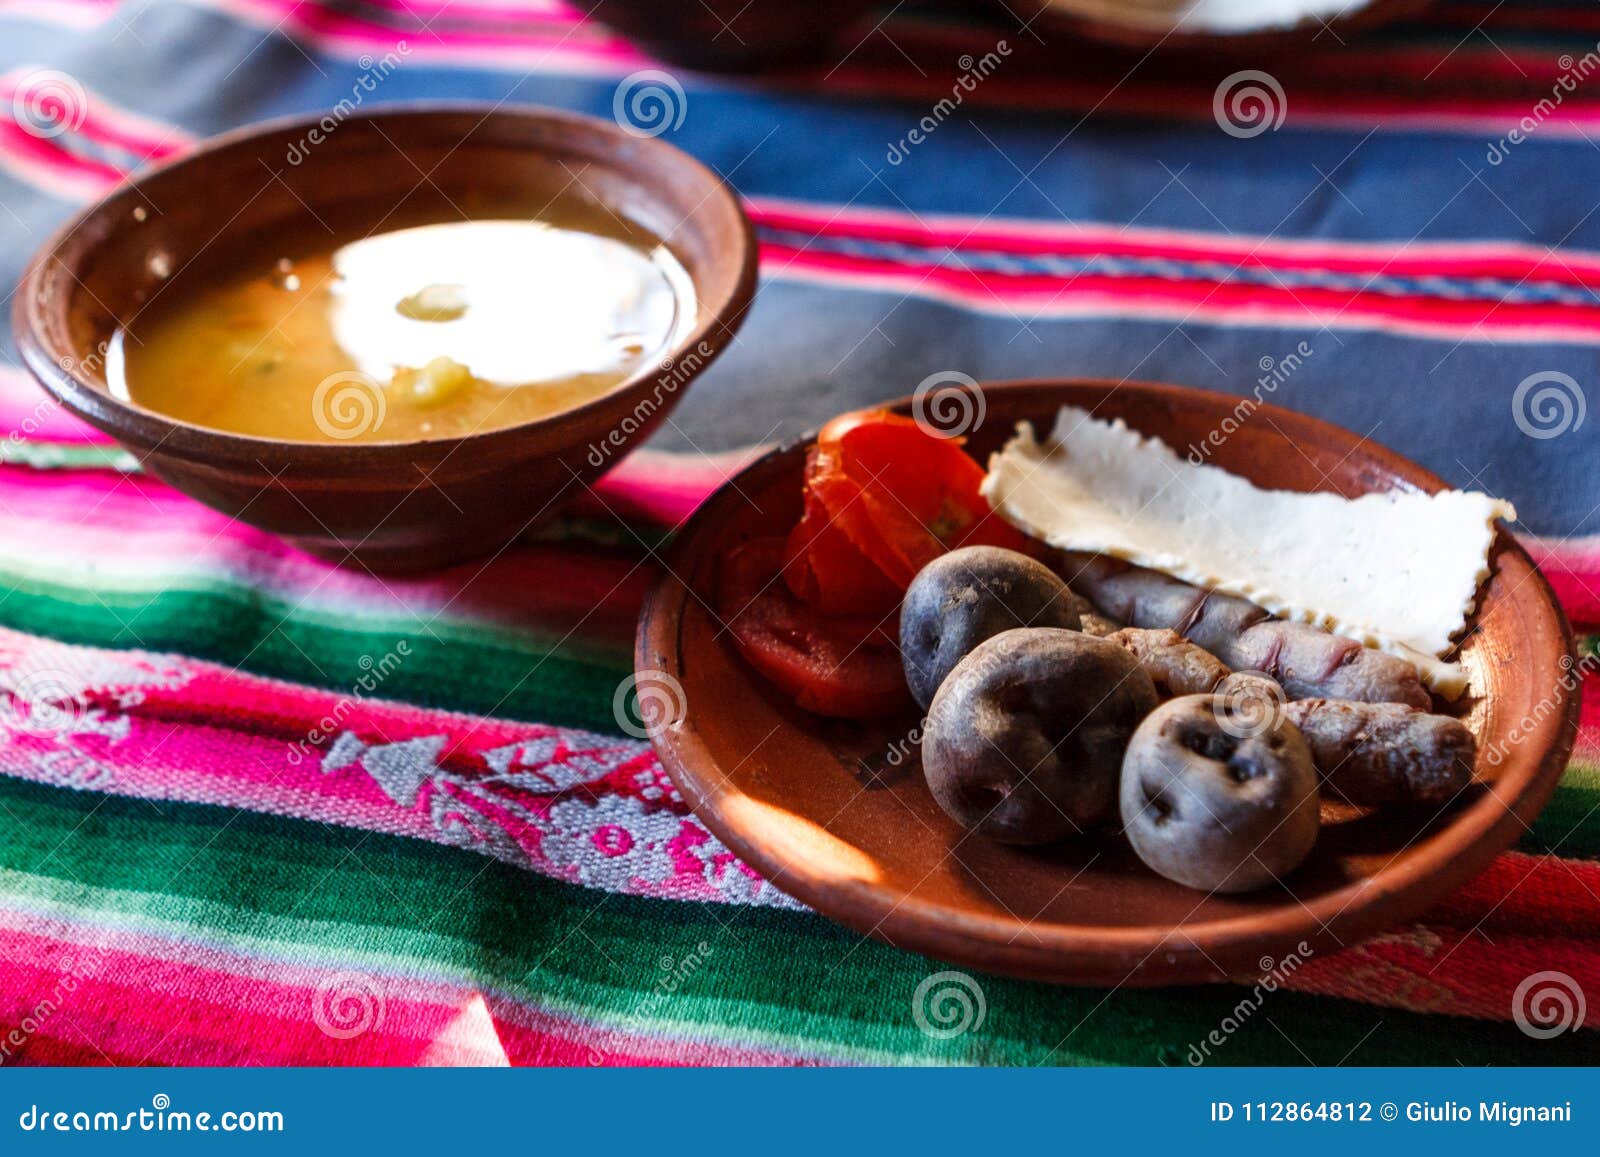 typical meal with peruvian food, amantani island, titicaca lake, peru